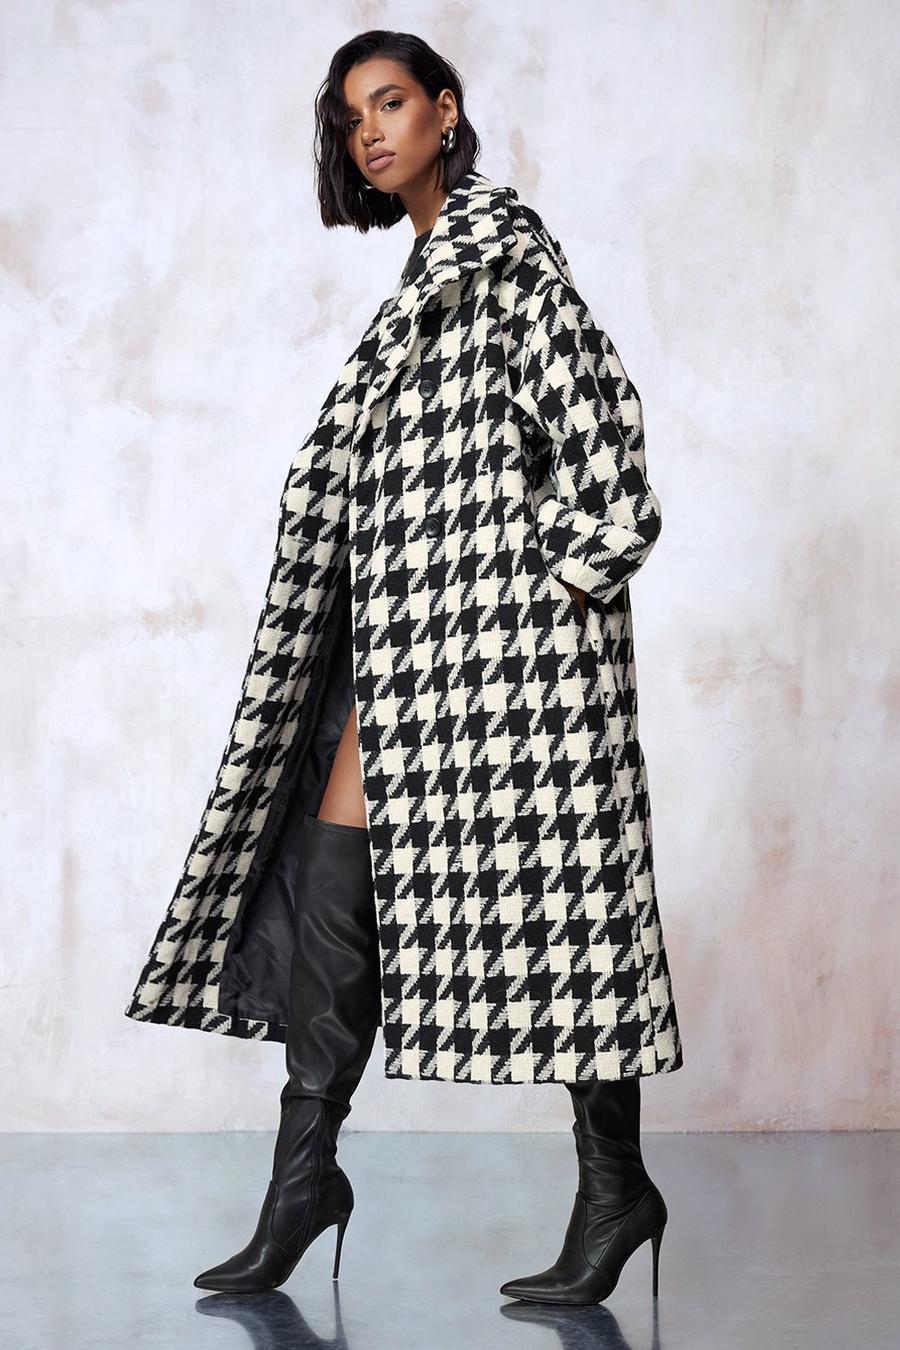 Black Kourtney Kardashian Barker Dogtooth Oversized Wool Look Maxi Coat